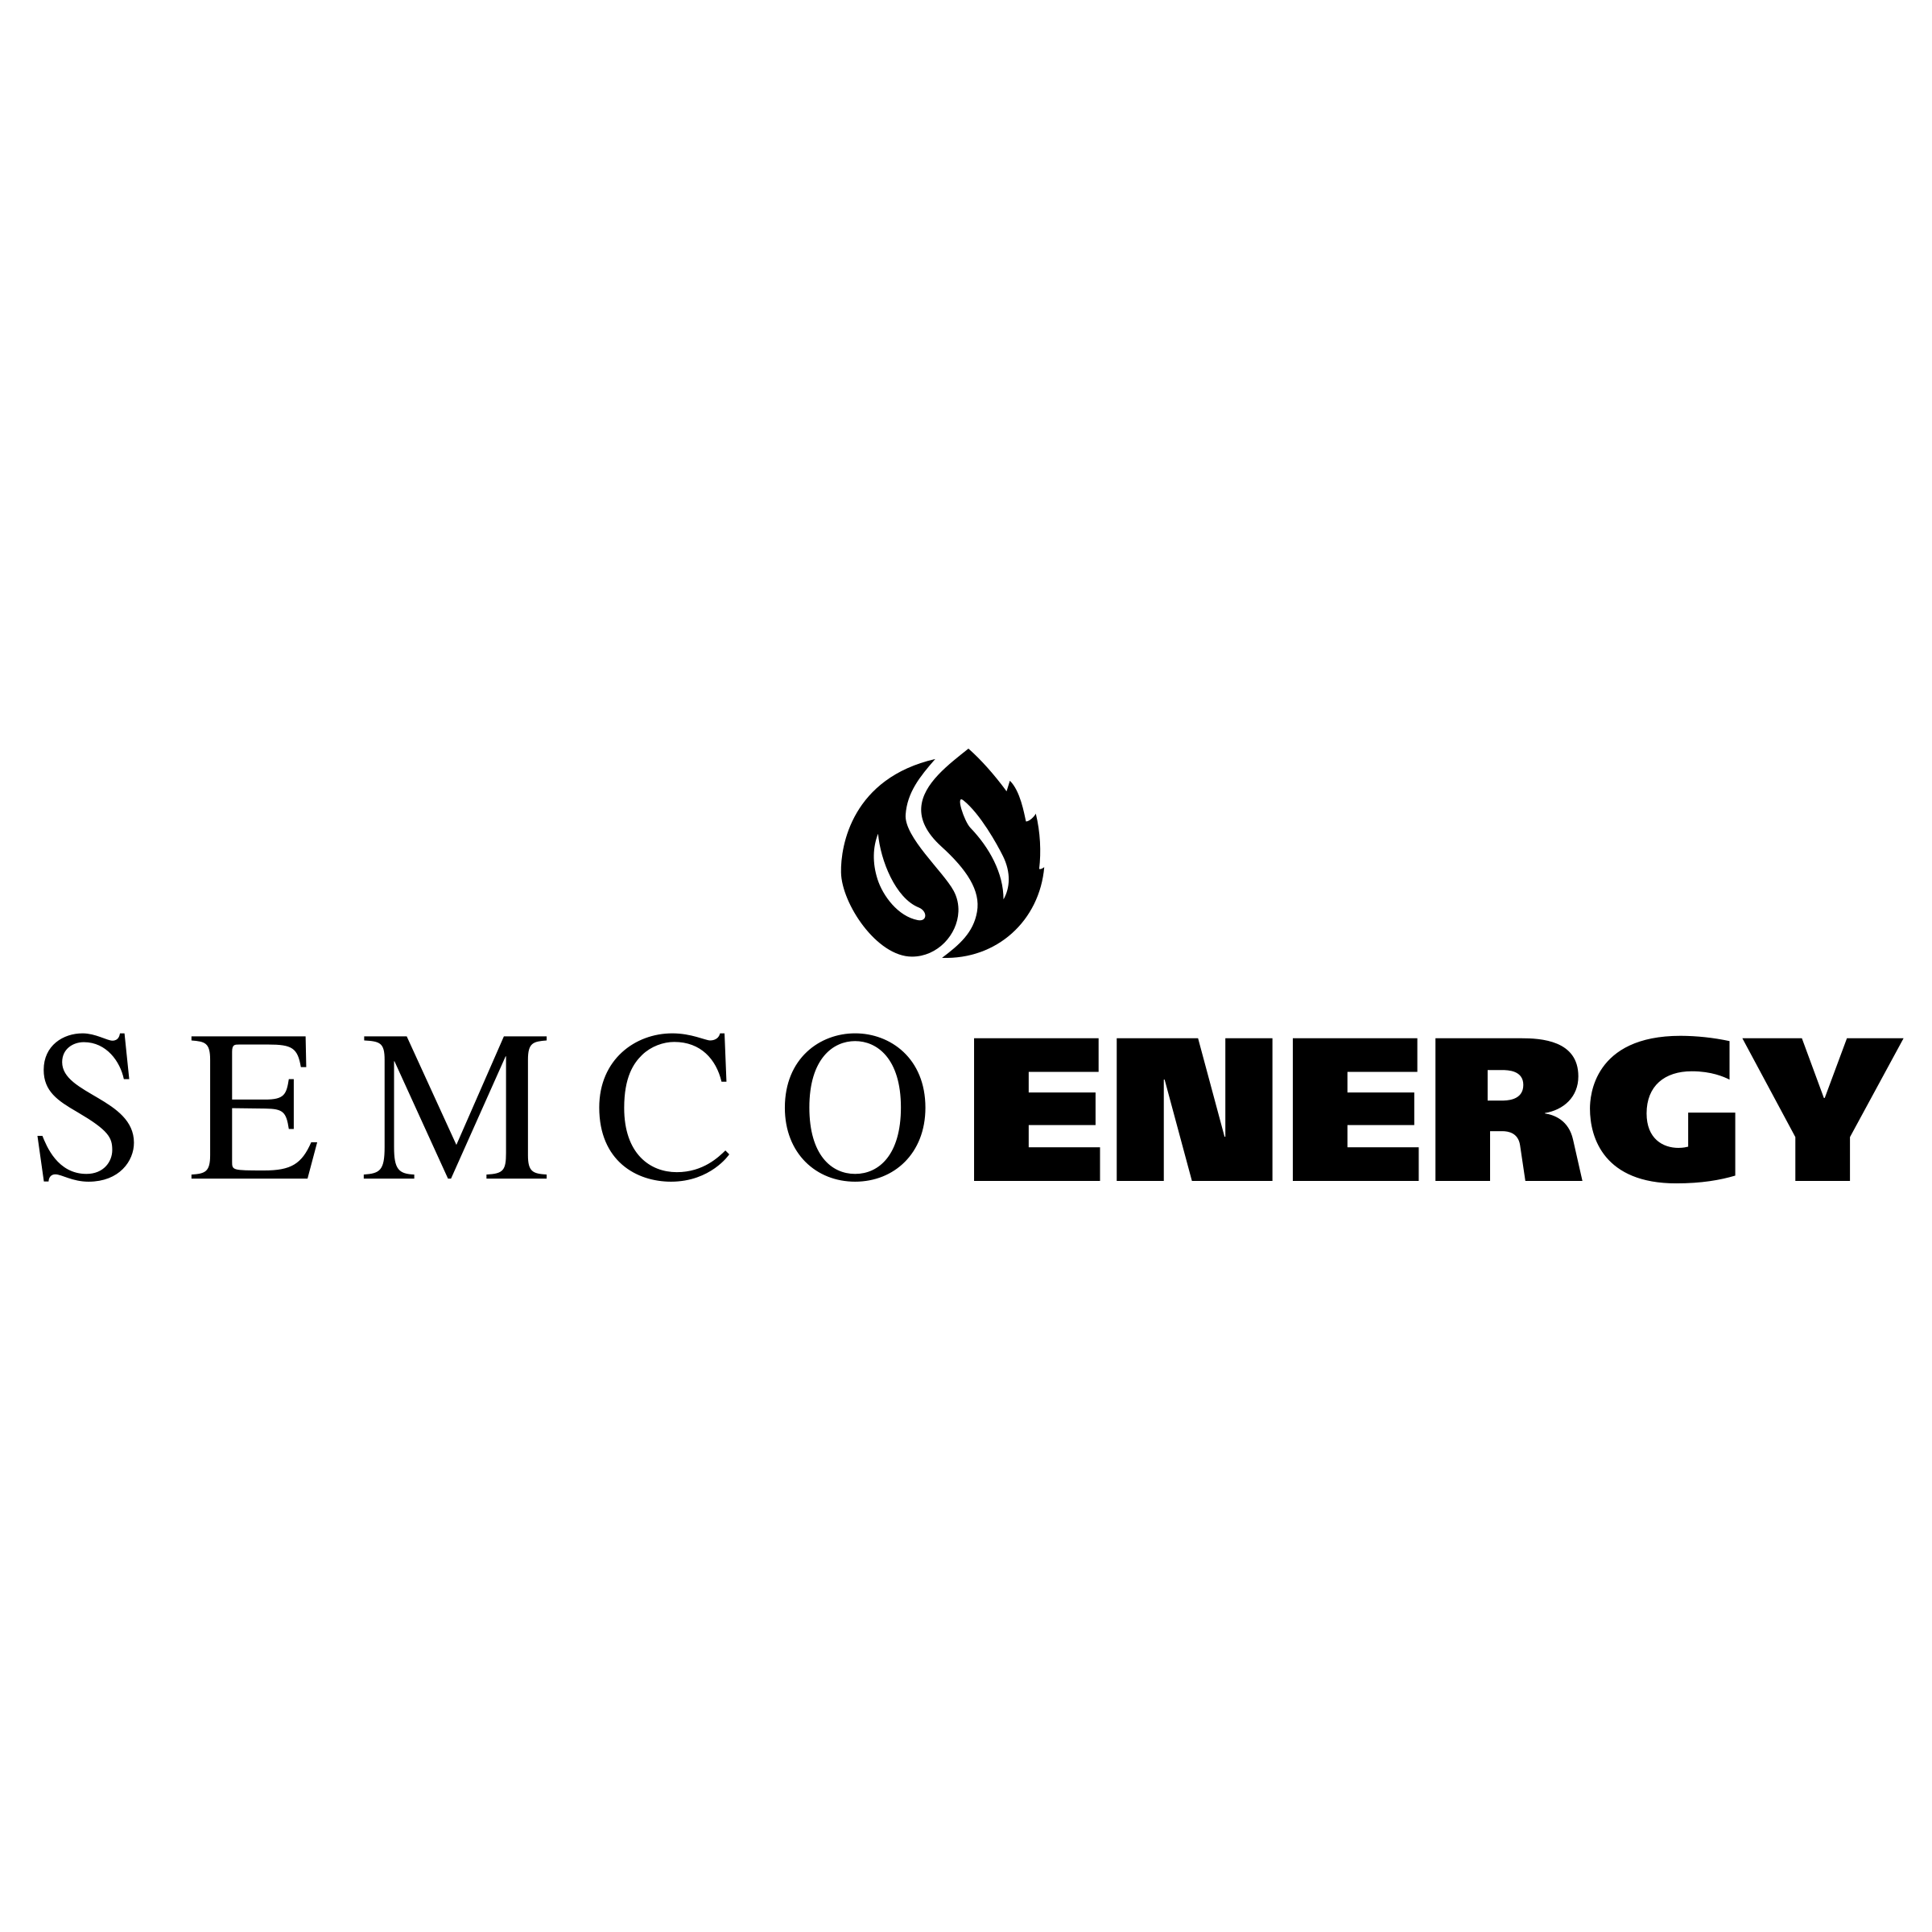 Semco Logo - Semco Energy Logo PNG Transparent & SVG Vector - Freebie Supply